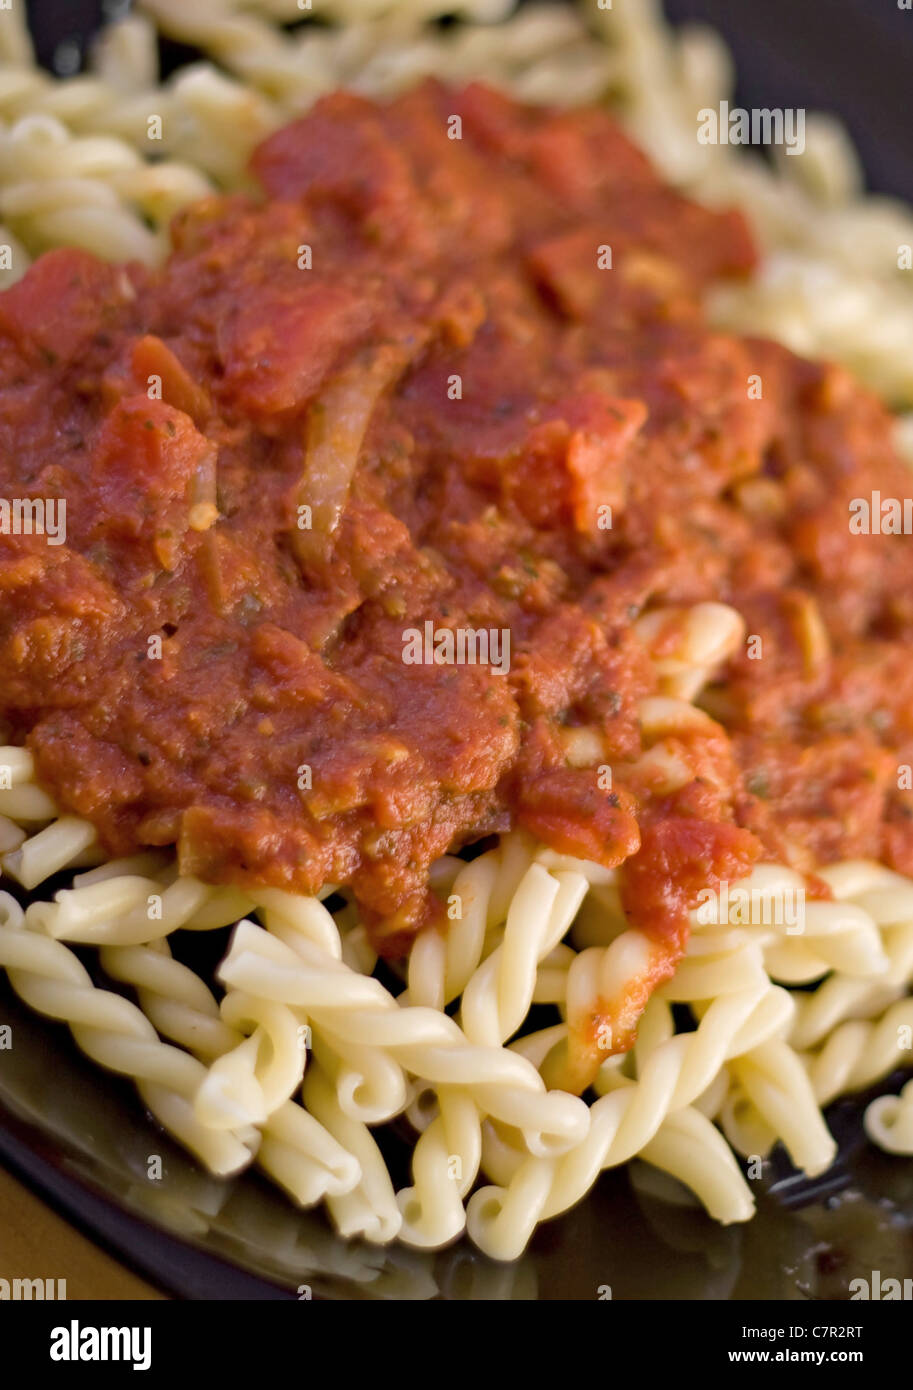 A delicious homemade Italian meal. Gemelli pasta with fresh homemade marinara sauce. Stock Photo